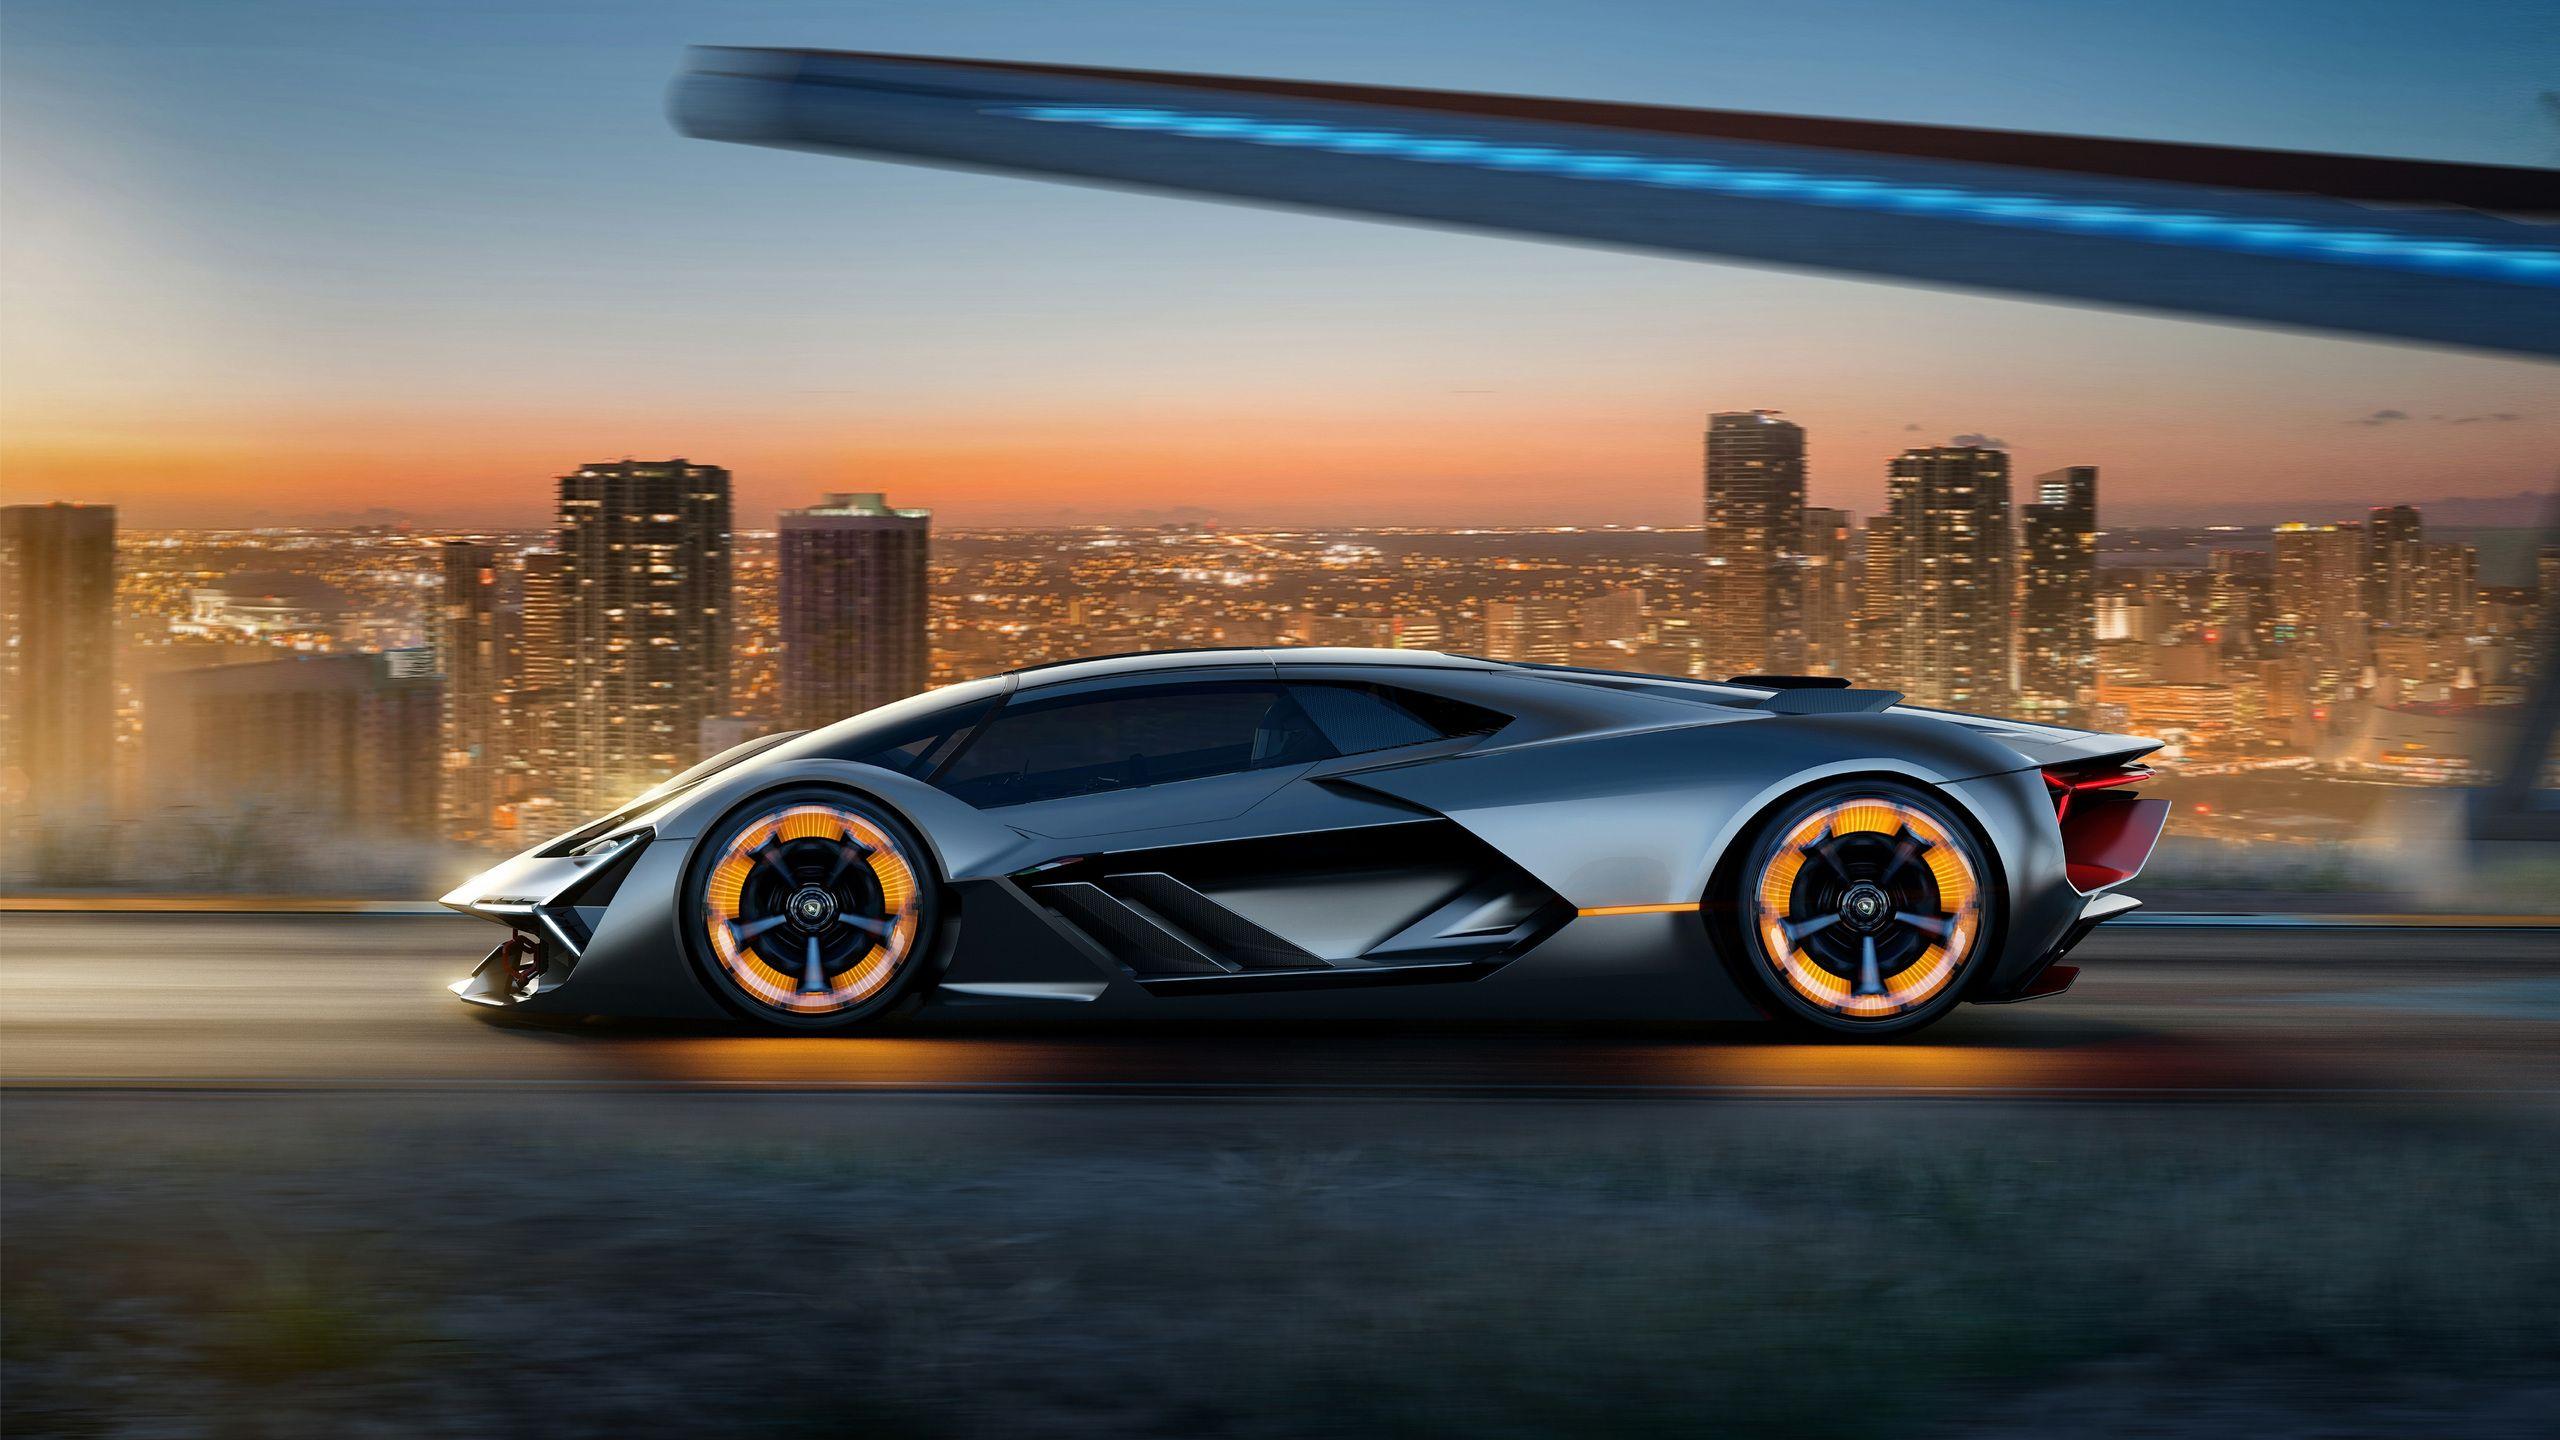 2560x1440 Xe ý tưởng Lamborghini Terzo Millennio 2017 1440P